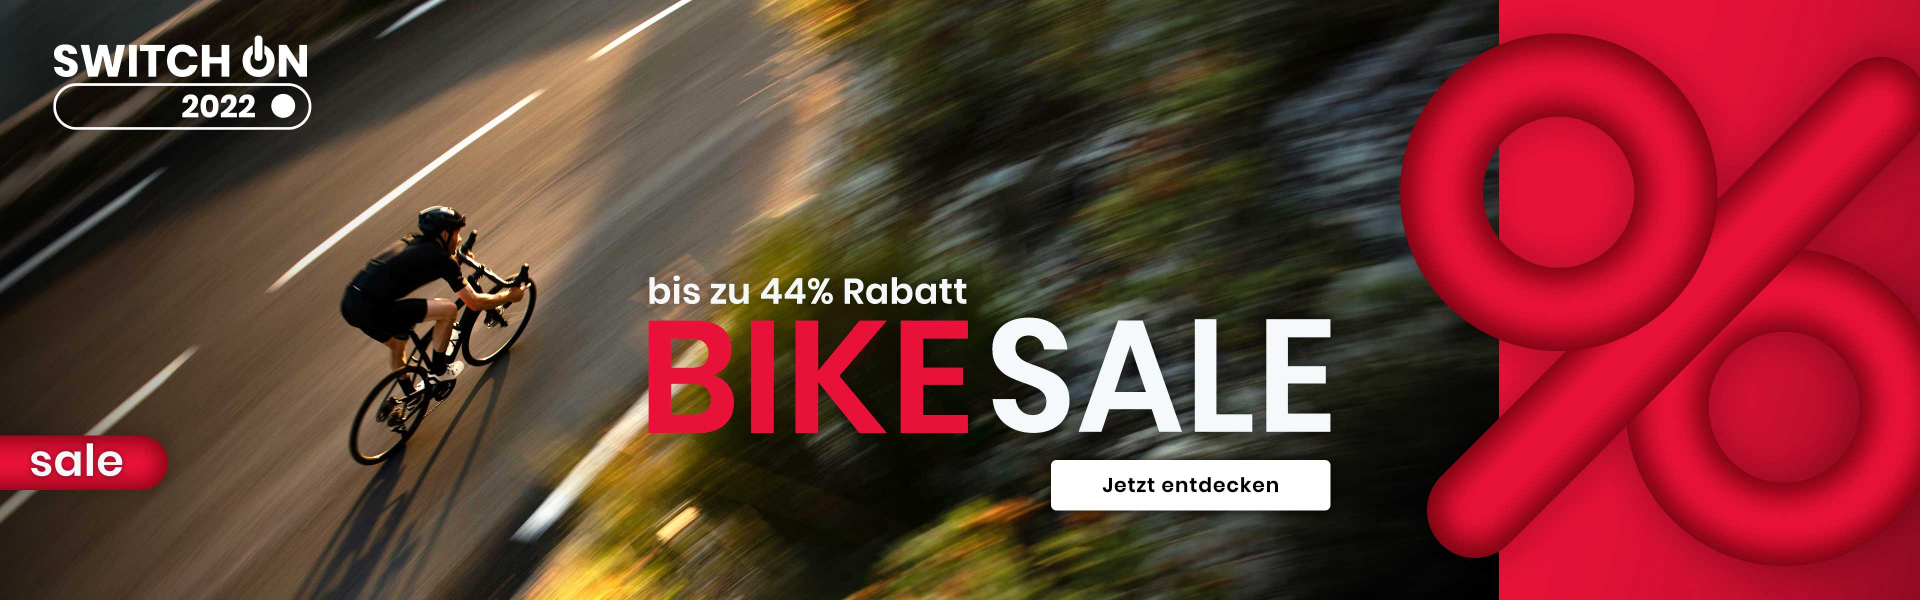 Bike Sale